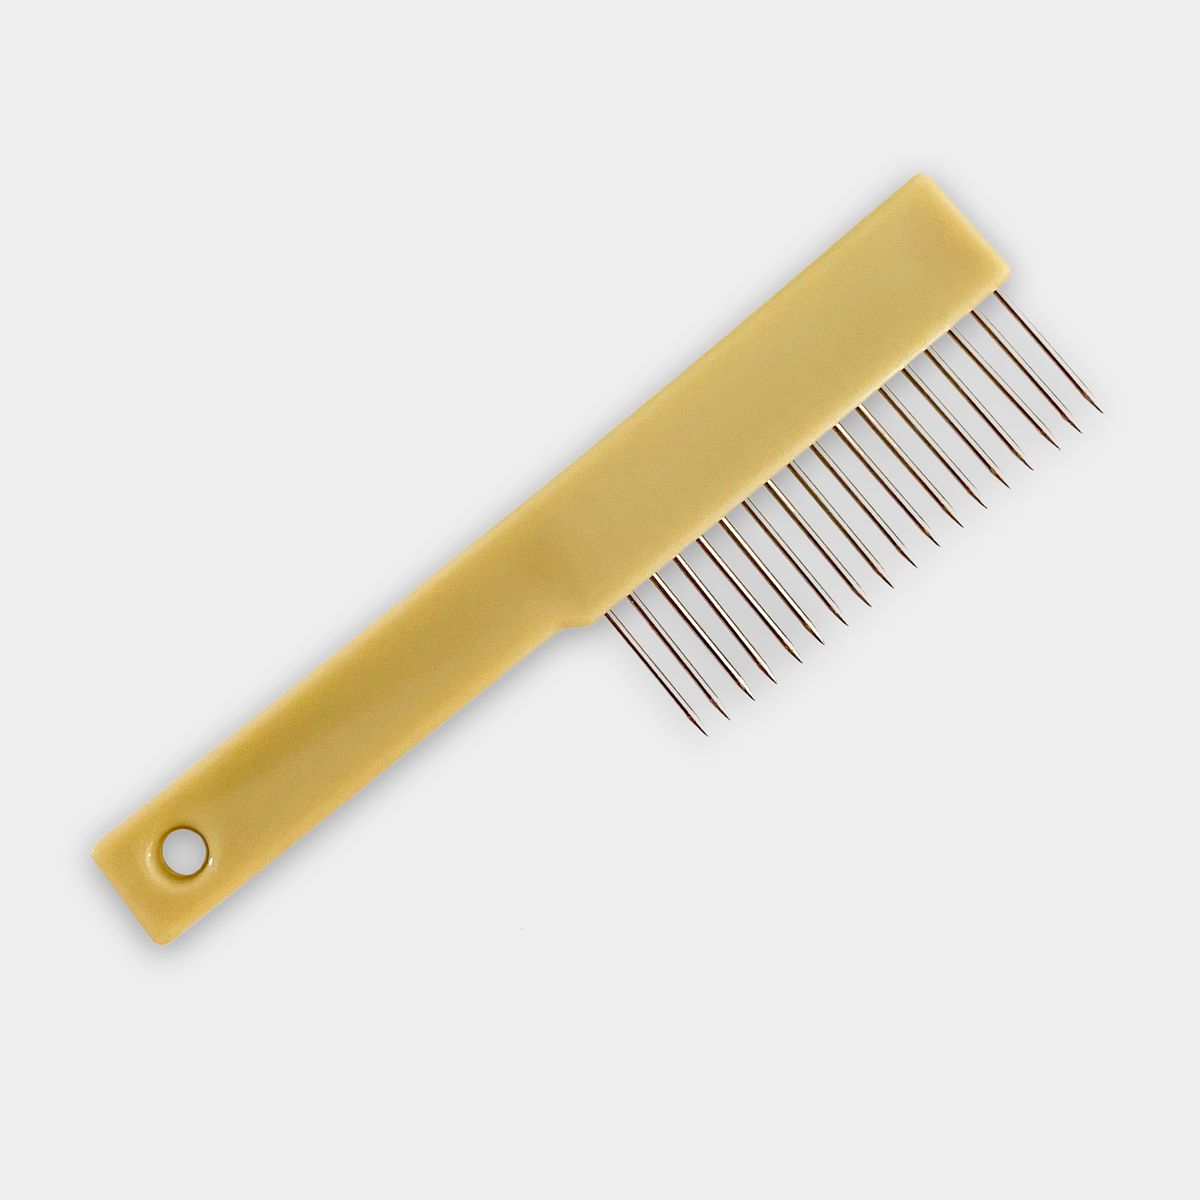 paintbrush comb